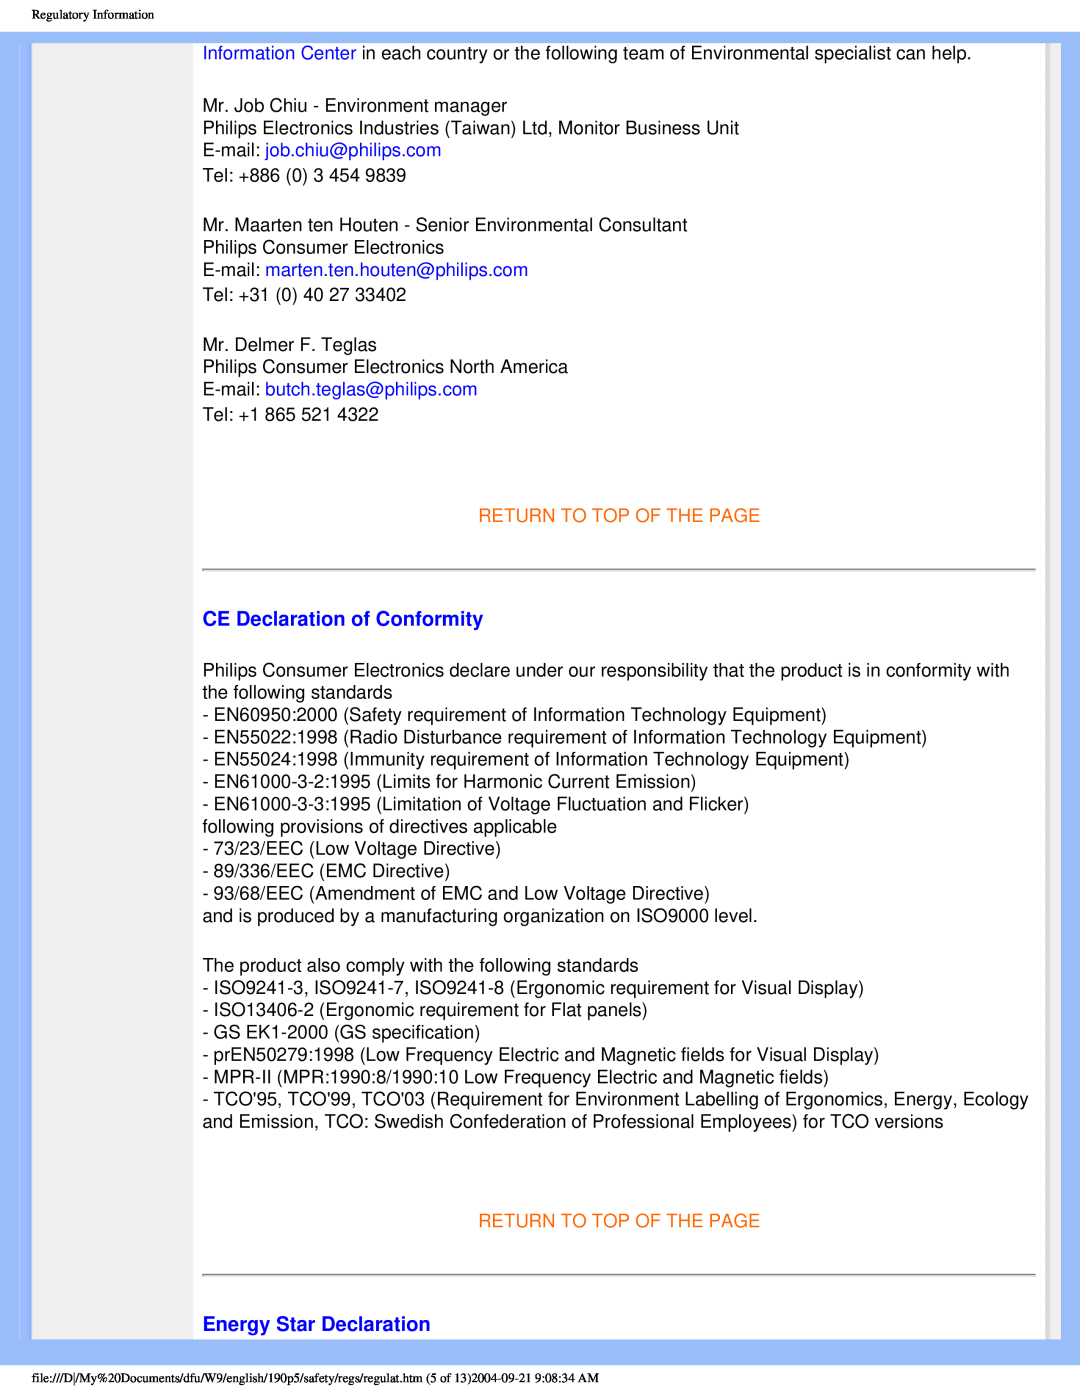 Philips 190PS user manual CE Declaration of Conformity, Energy Star Declaration, E-mail job.chiu@philips.com 